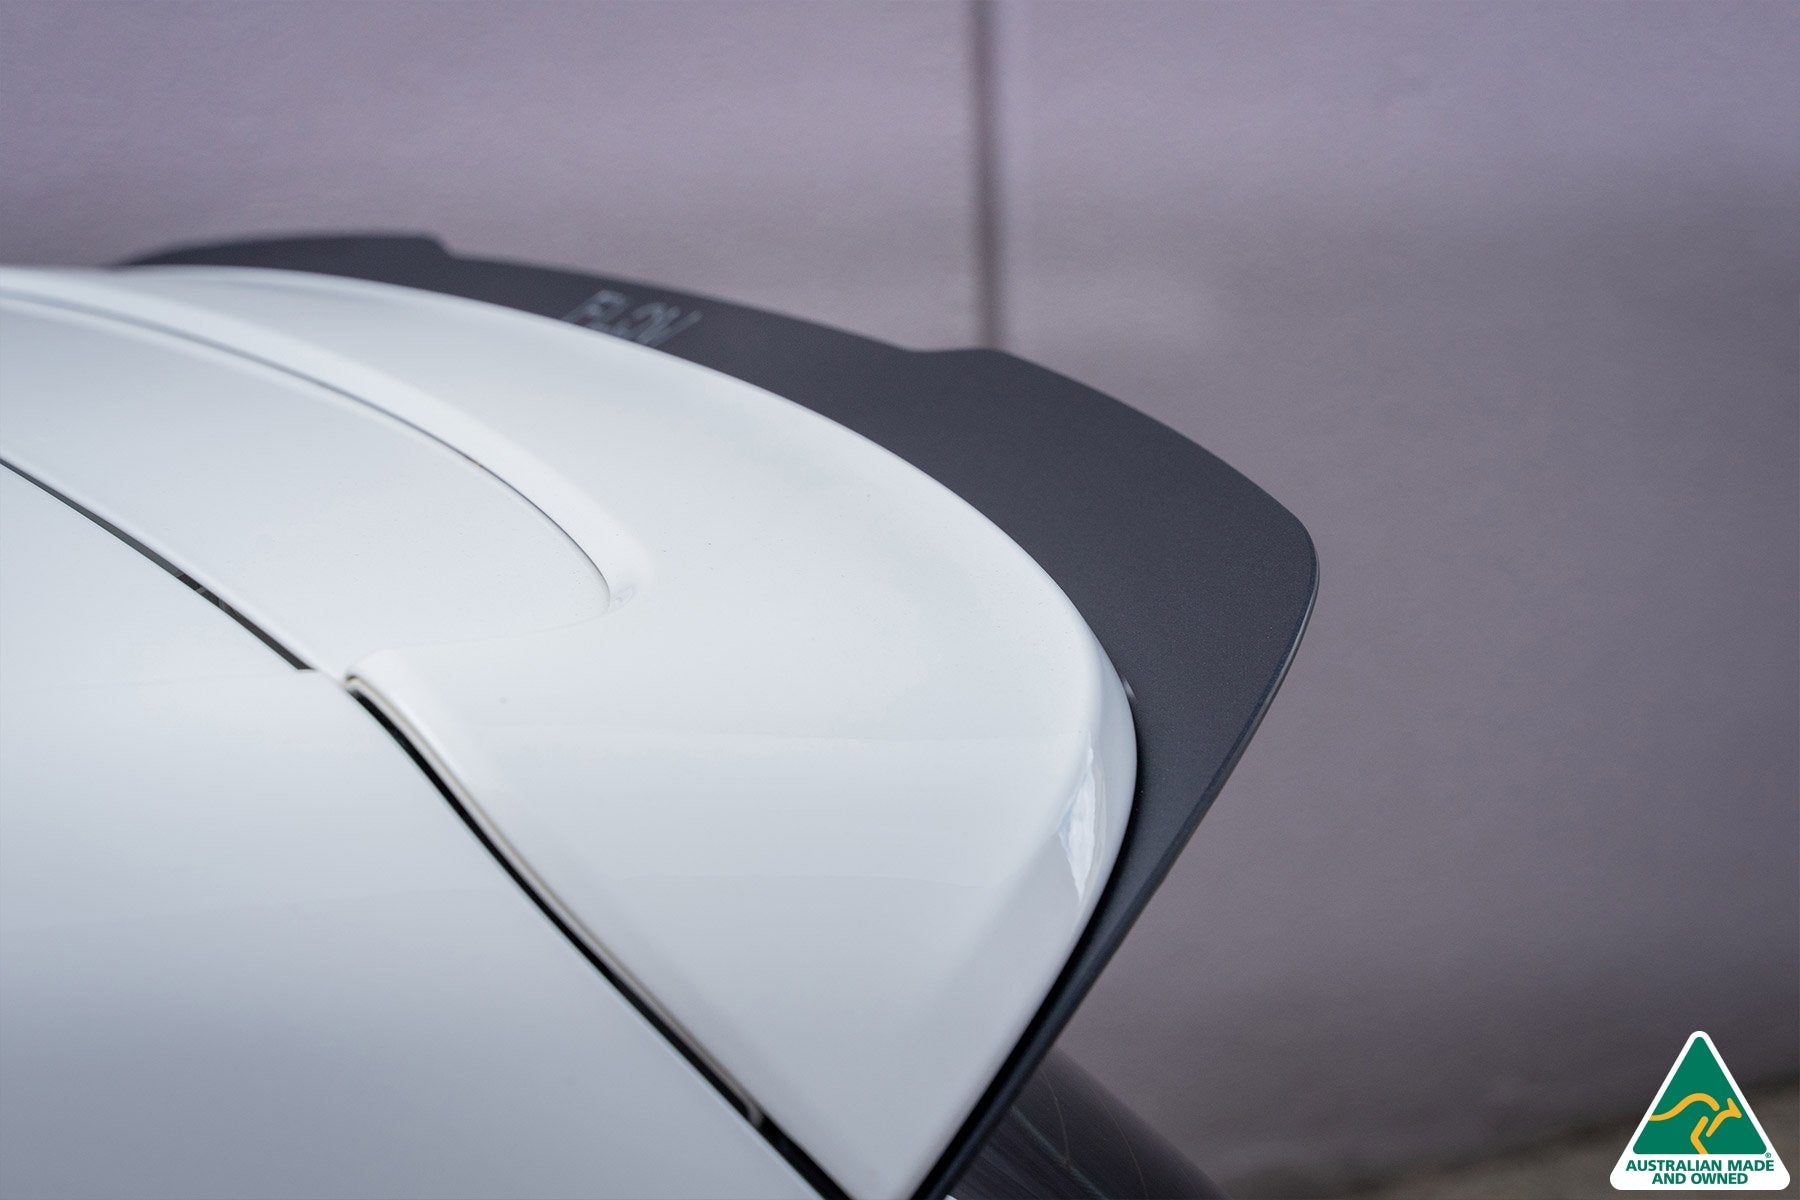 MK6 Golf GTI & R Rear Spoiler Extension - MODE Auto Concepts